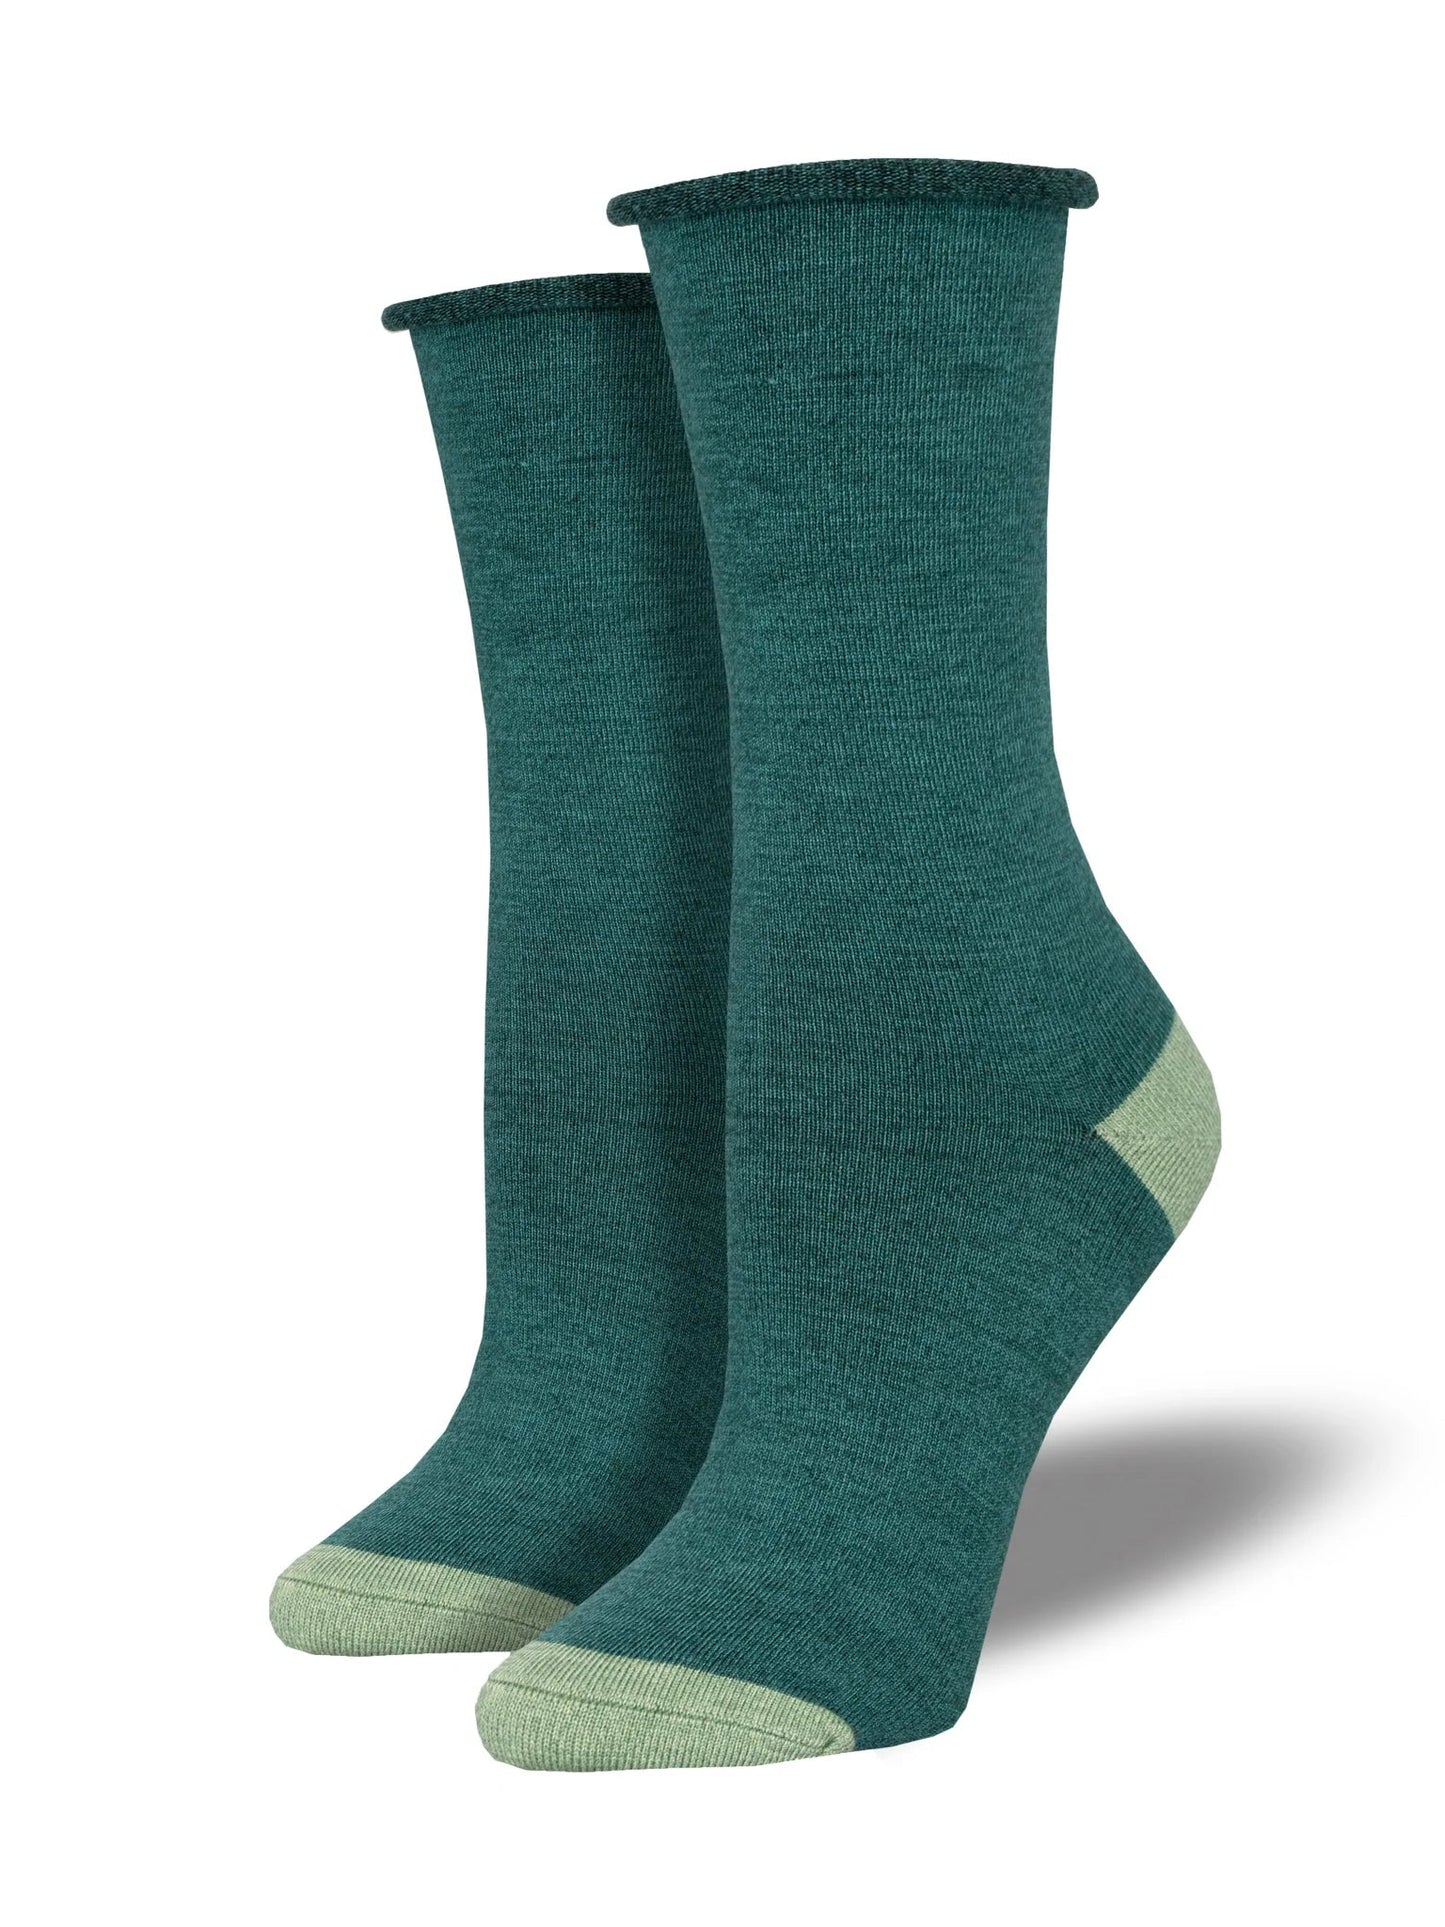 Contrast Heel-Toe | Bamboo | Green Heather - Socks - Socksmith